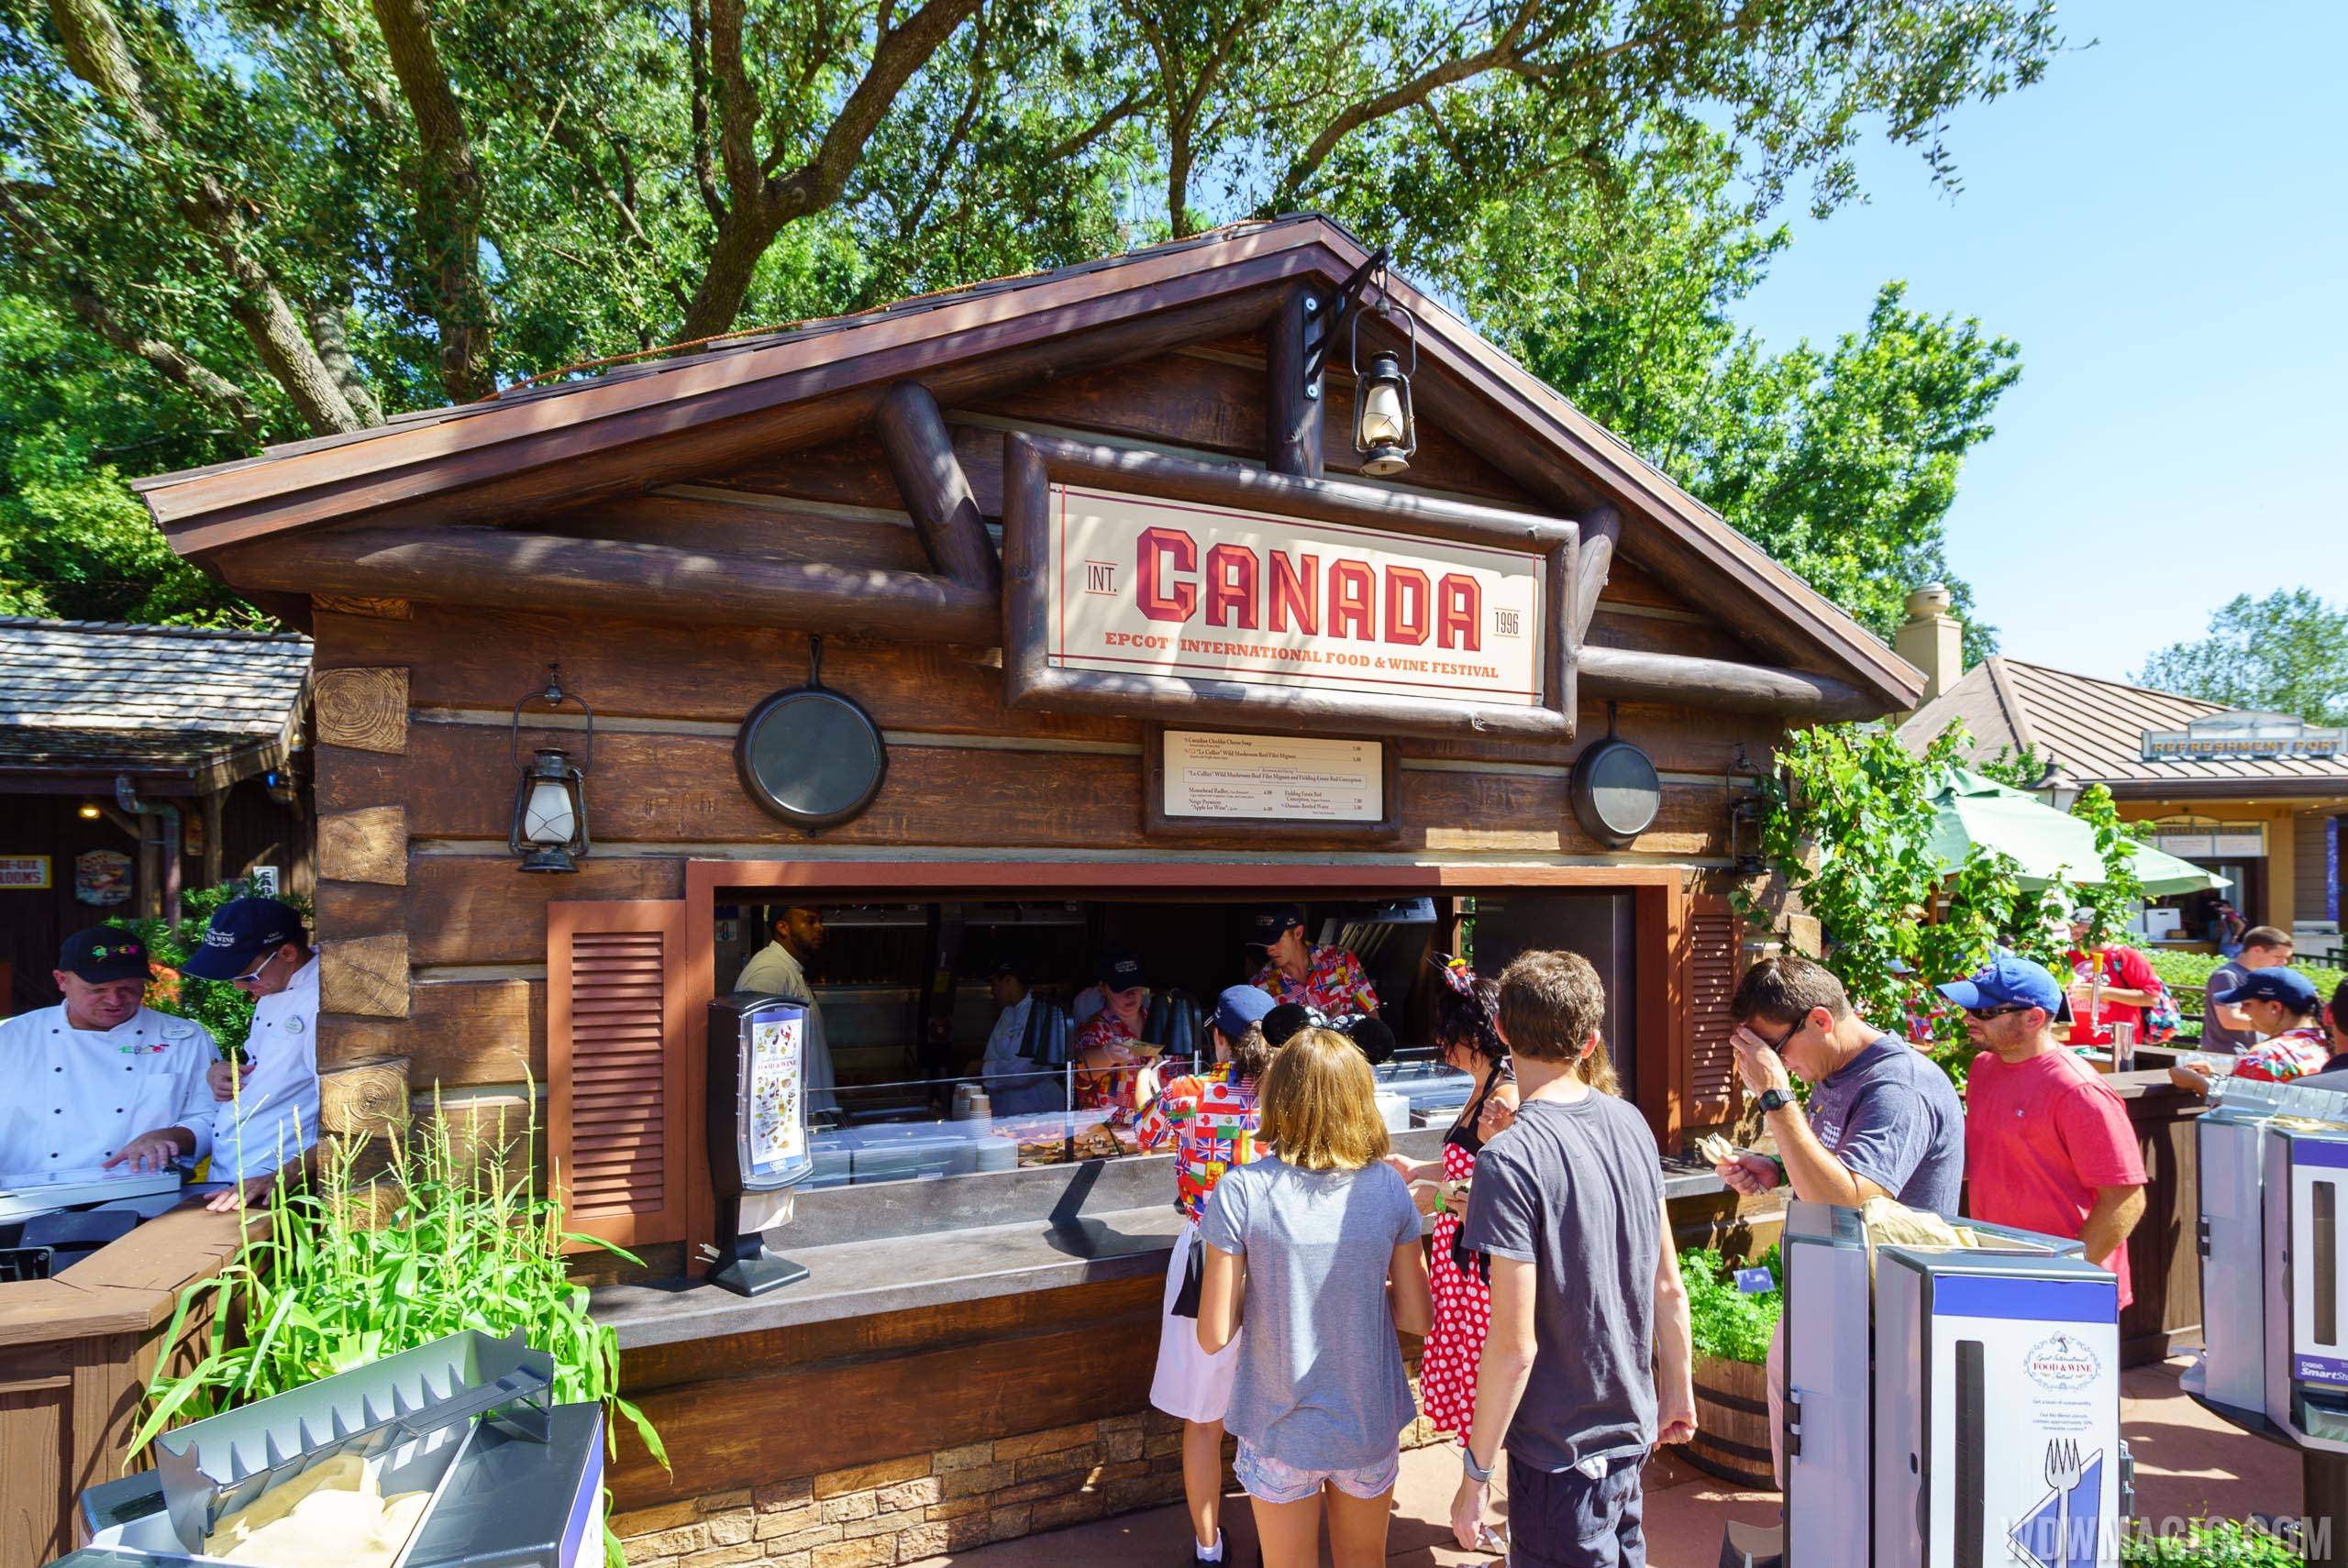 2017 Epcot Food and Wine Festival - Canada marketplace kiosk